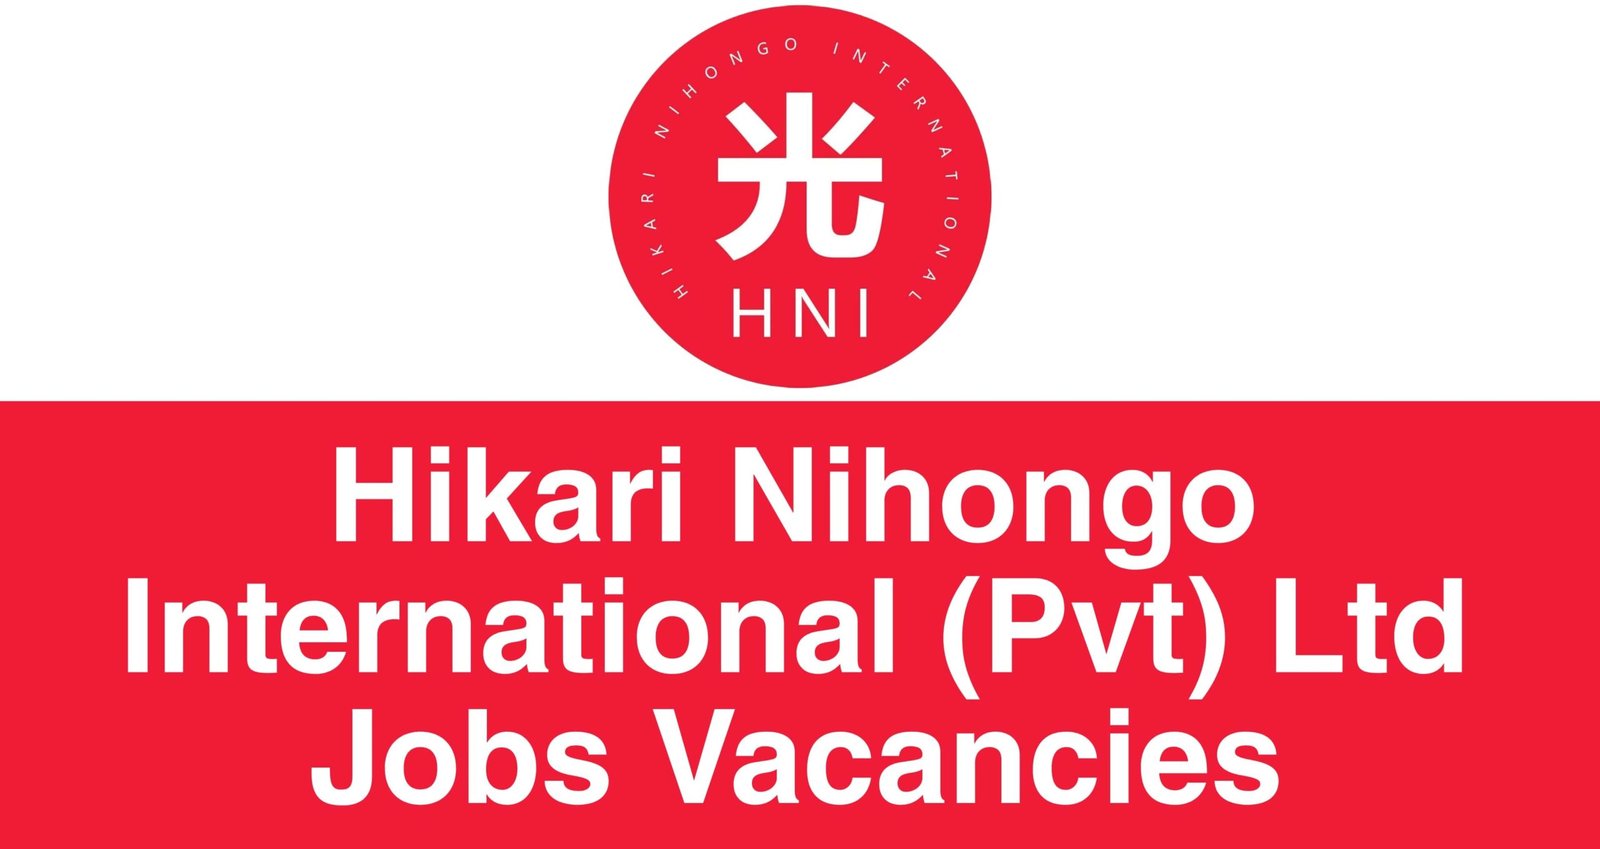 Hikari Nihongo International (Pvt) Ltd Jobs Vacancies